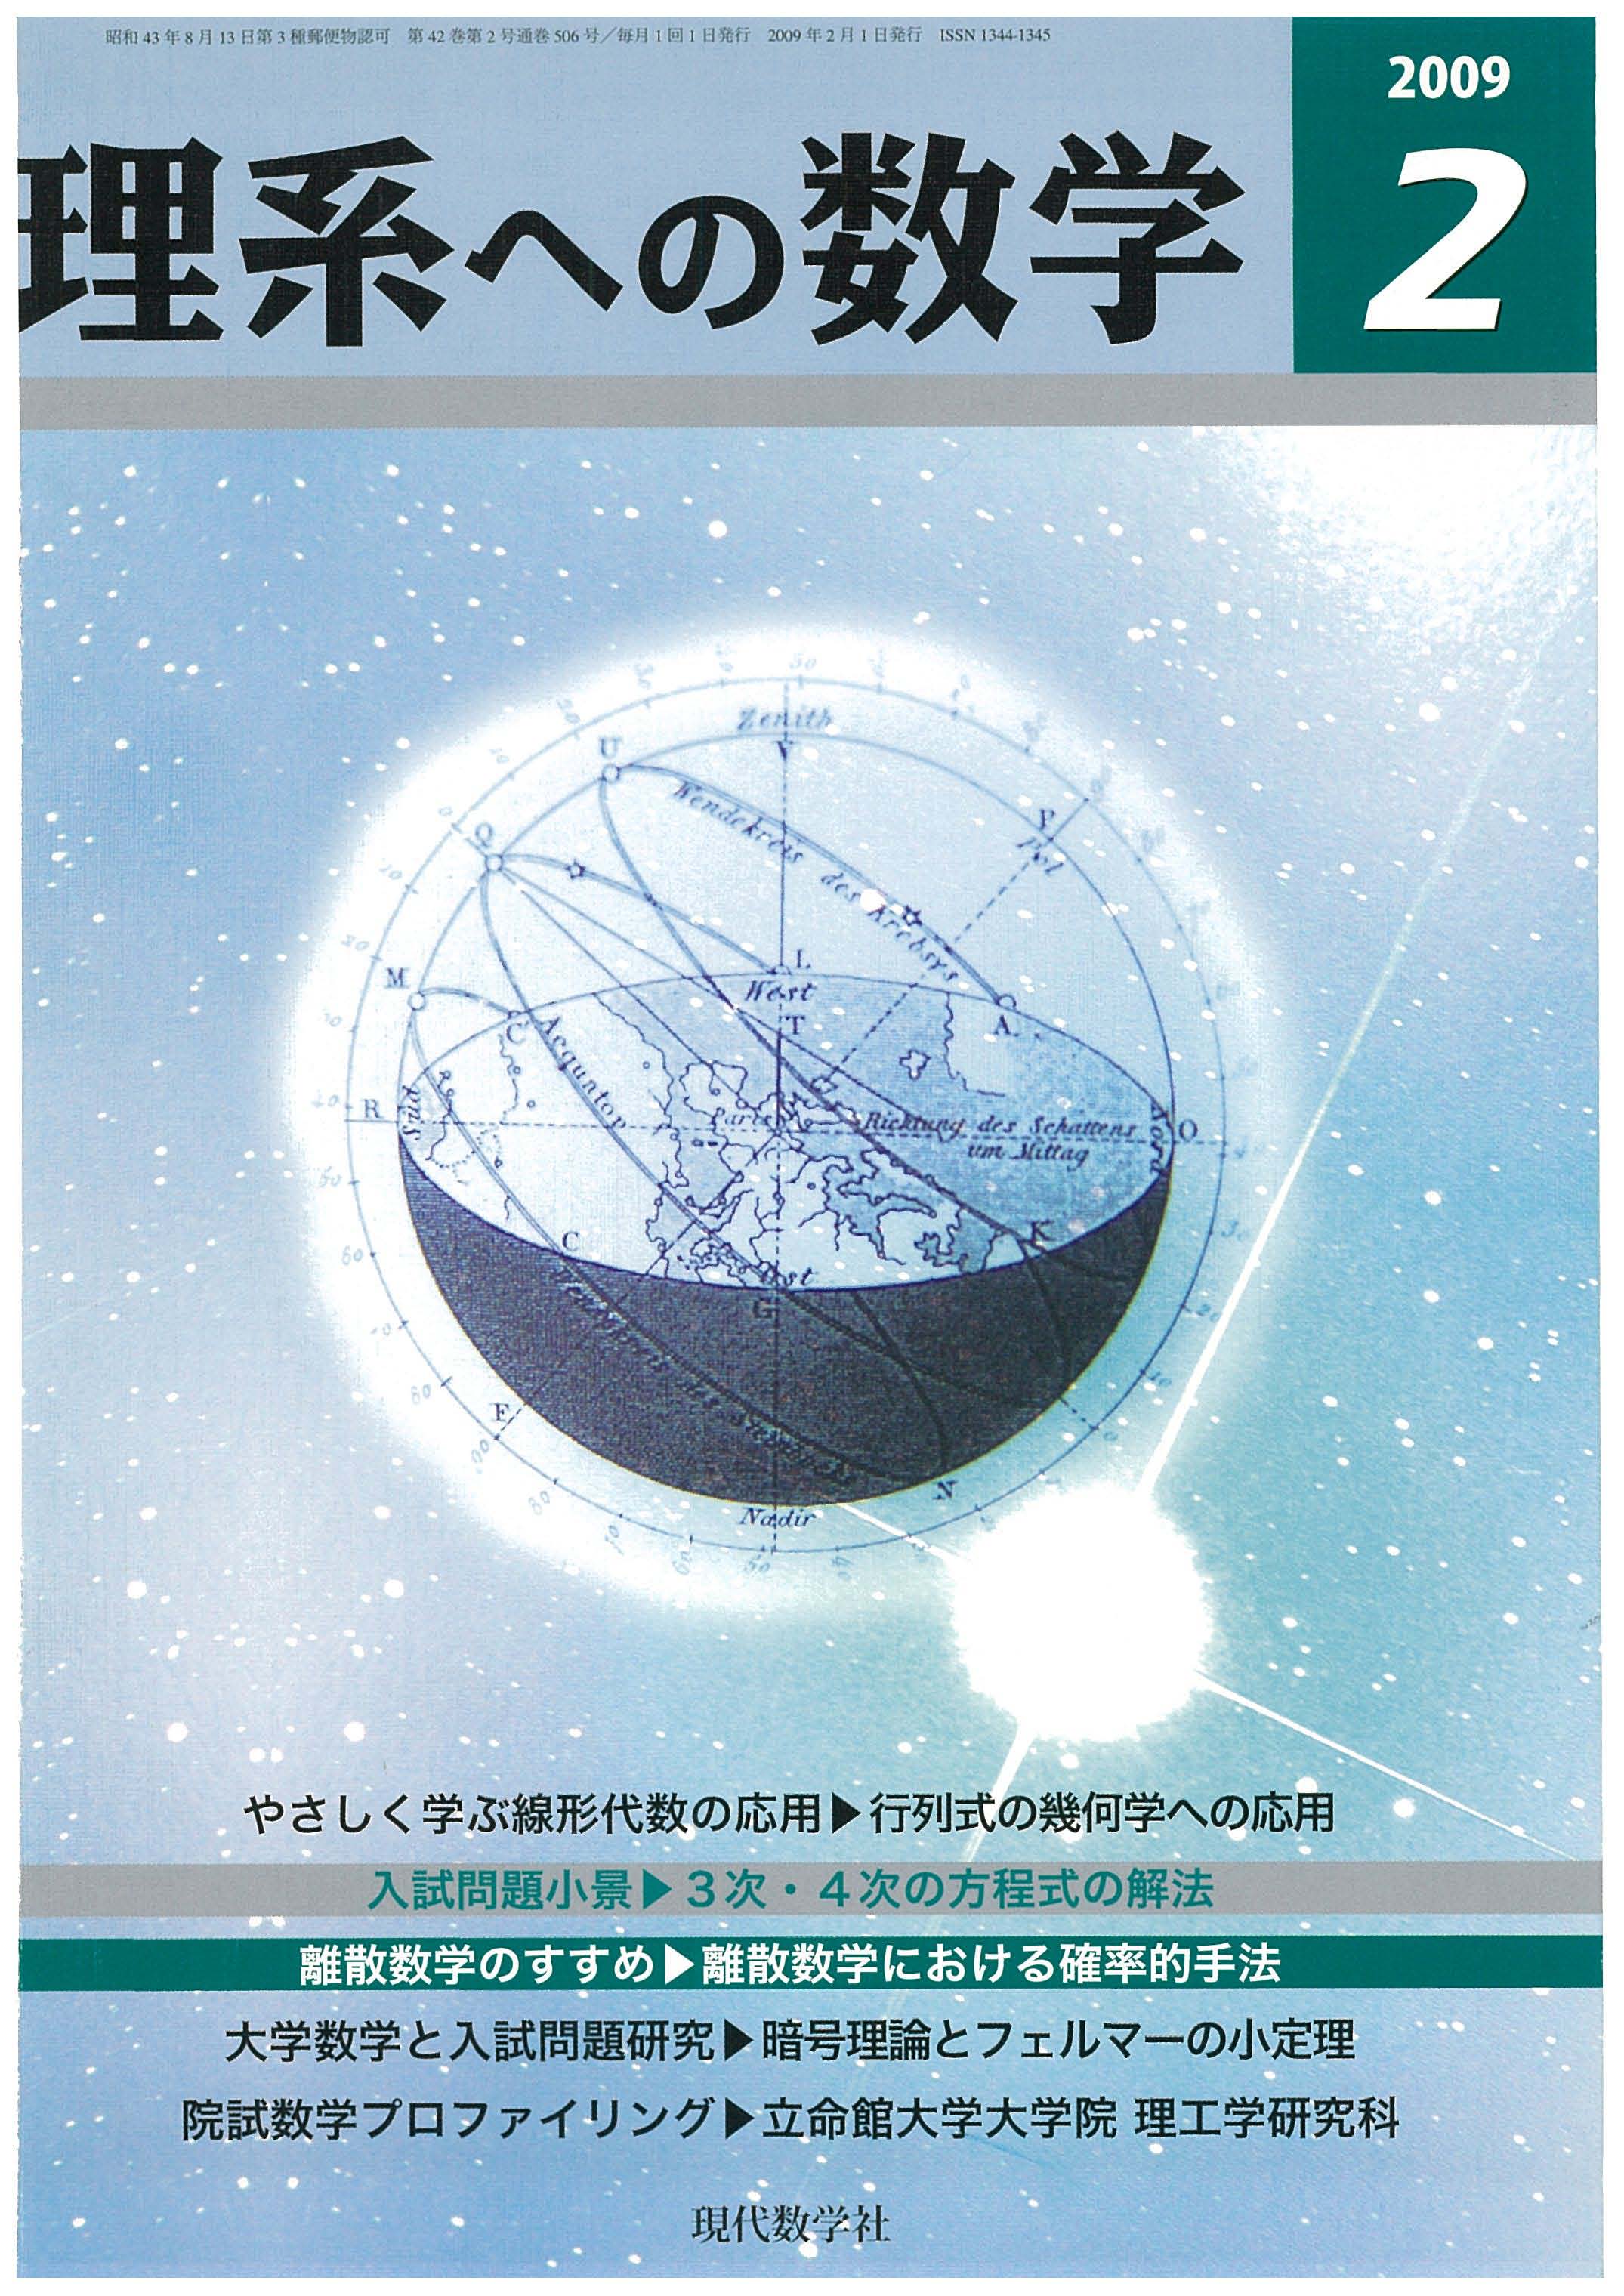 理系への数学 09年2月号 株式会社 現代数学社